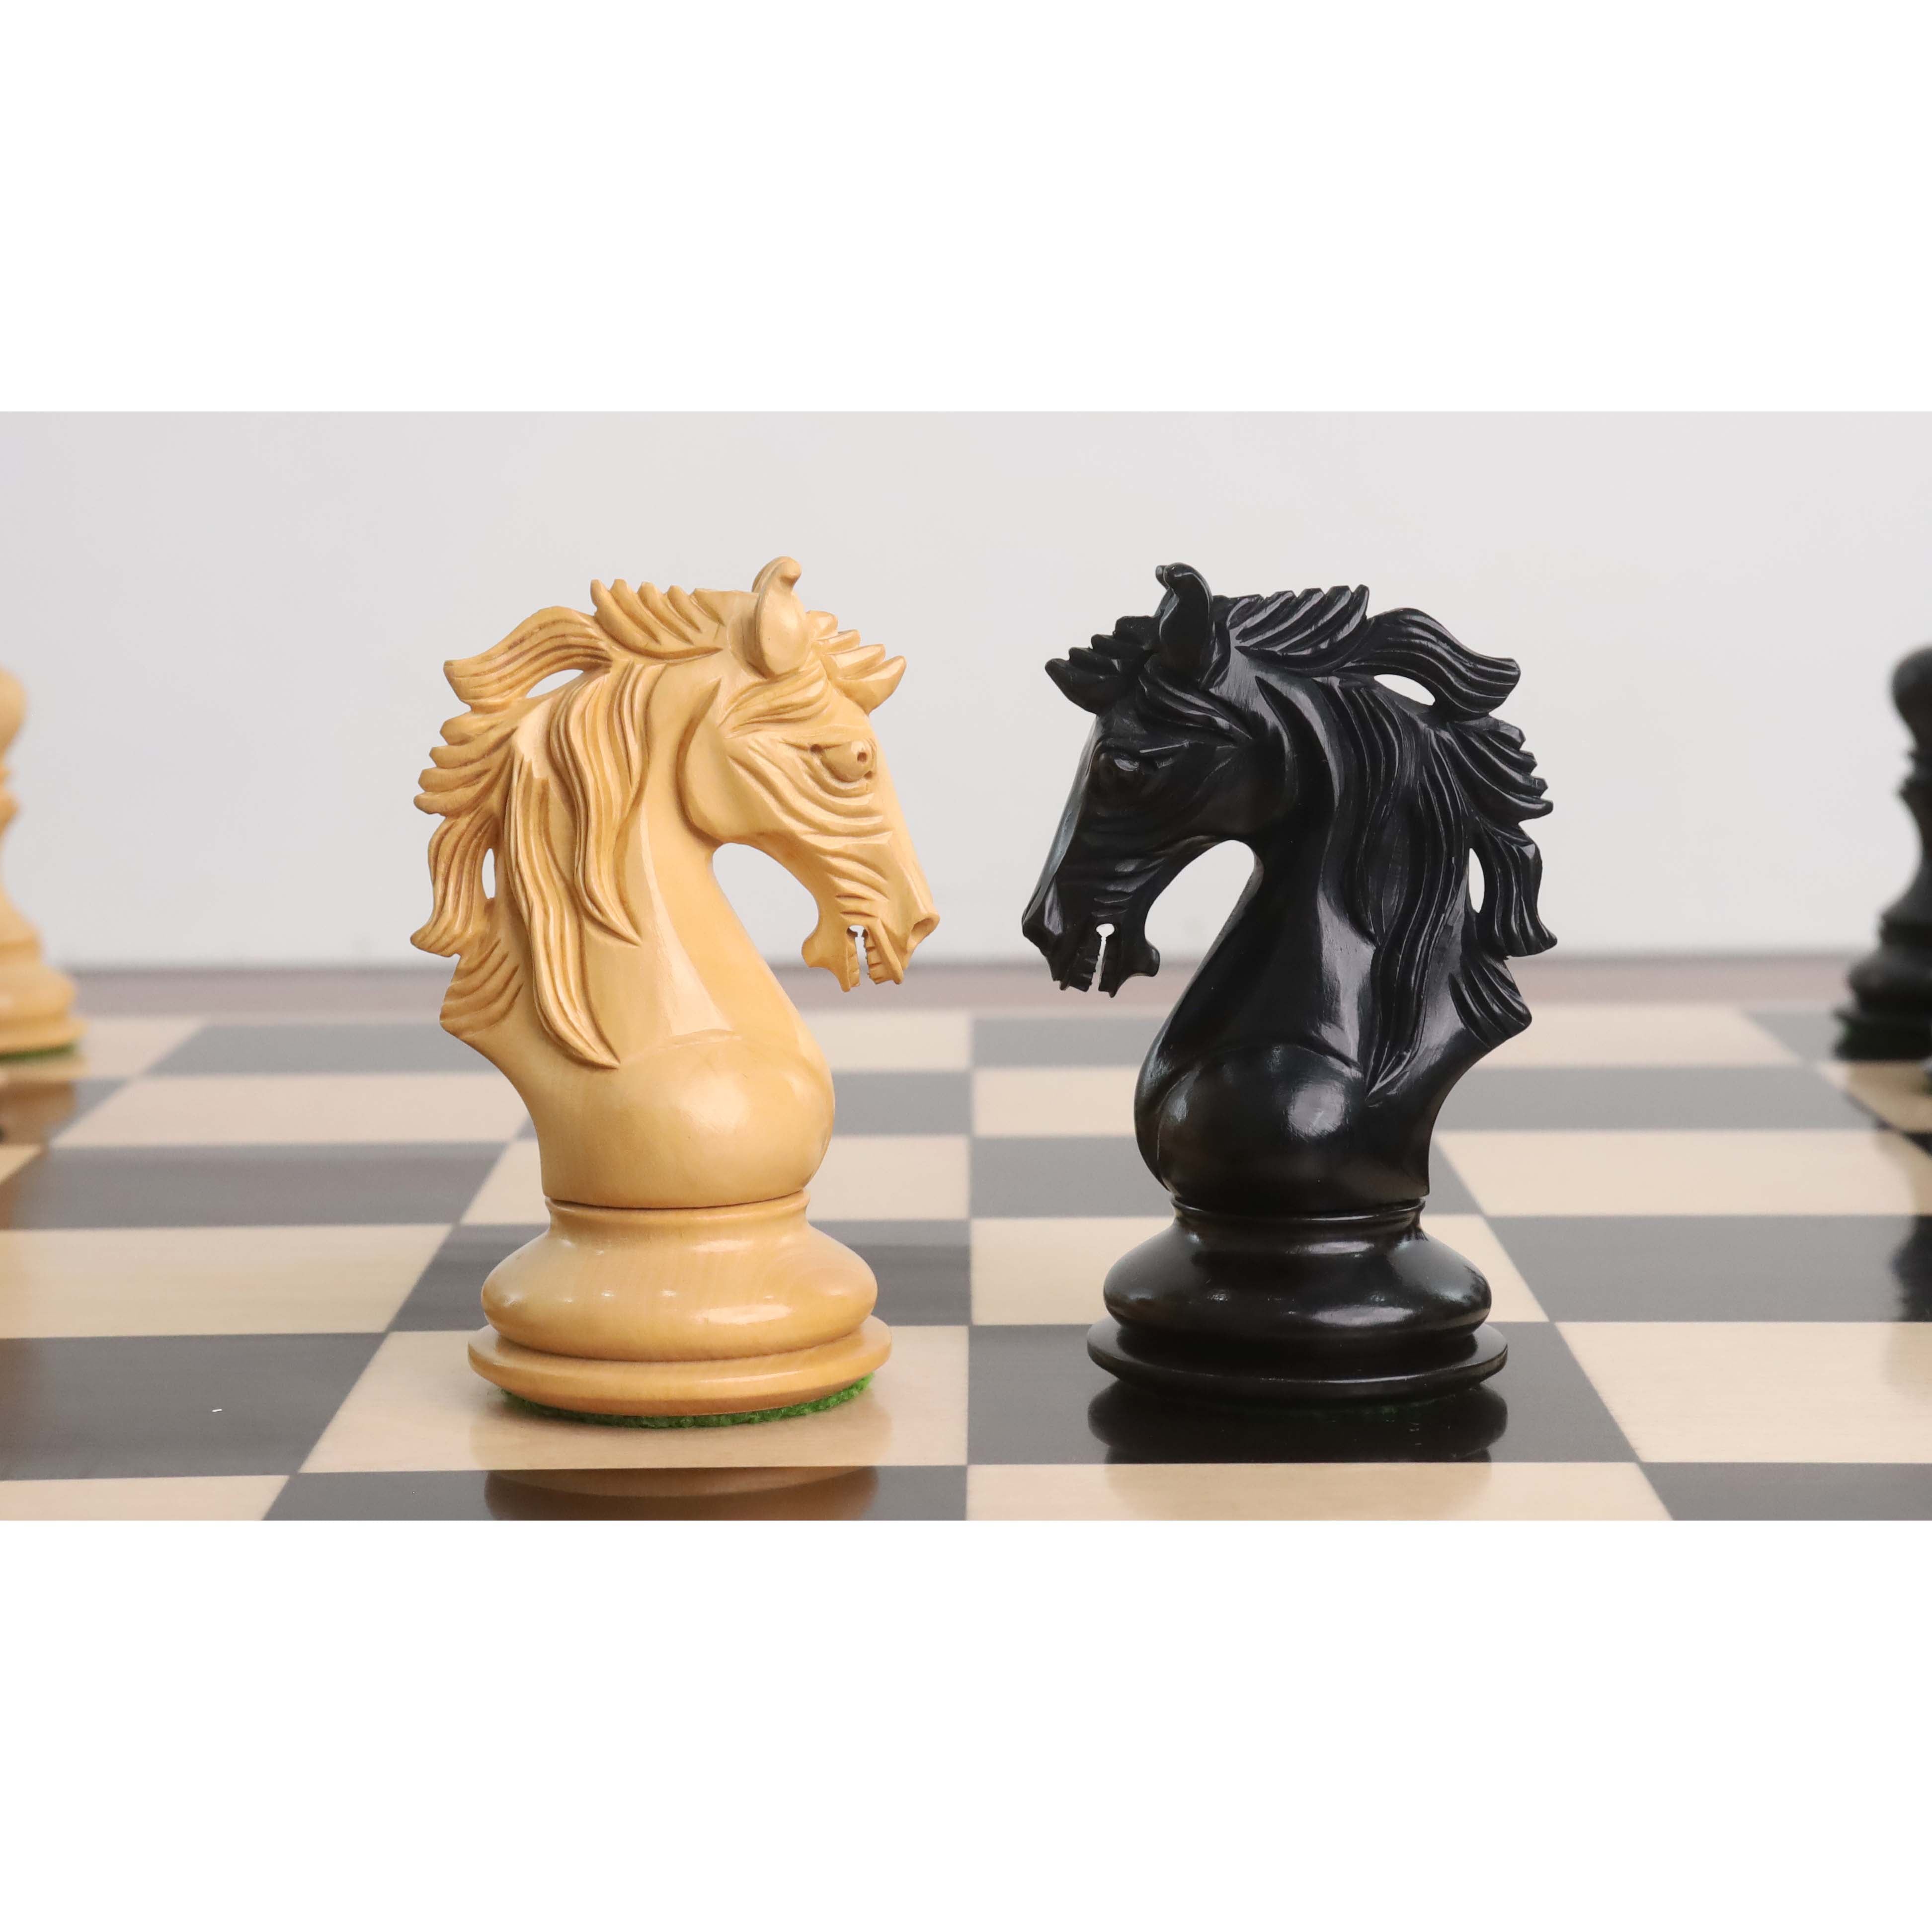 4.4" Goliath Series Luxury Staunton Chess Pieces Only Set - Ebony Wood & Boxwood